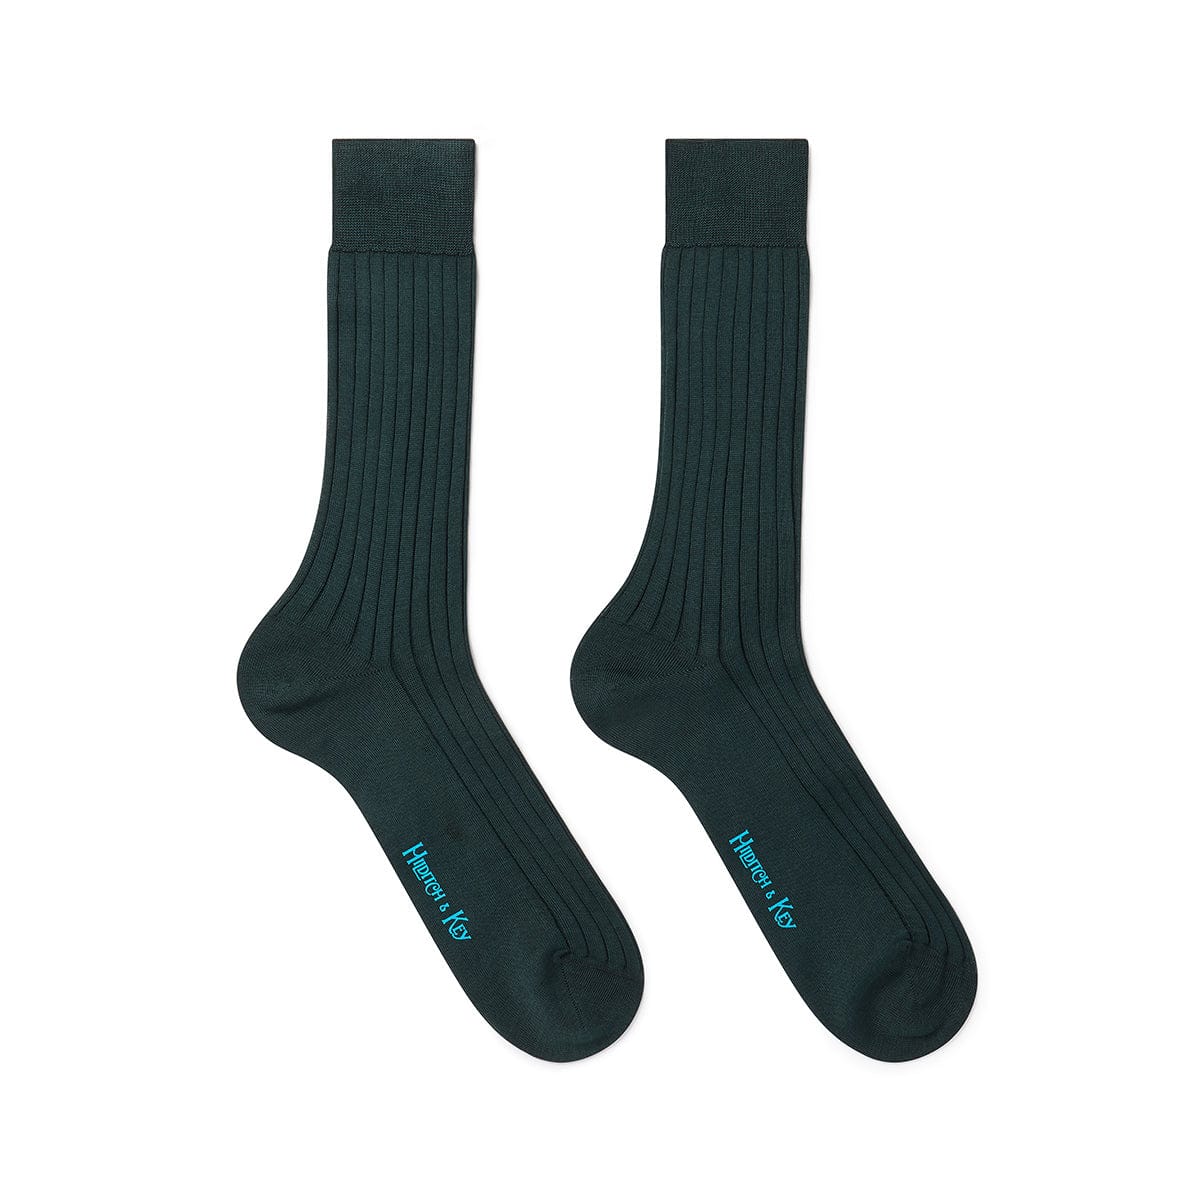 Short Plain Dark Green Cotton Socks